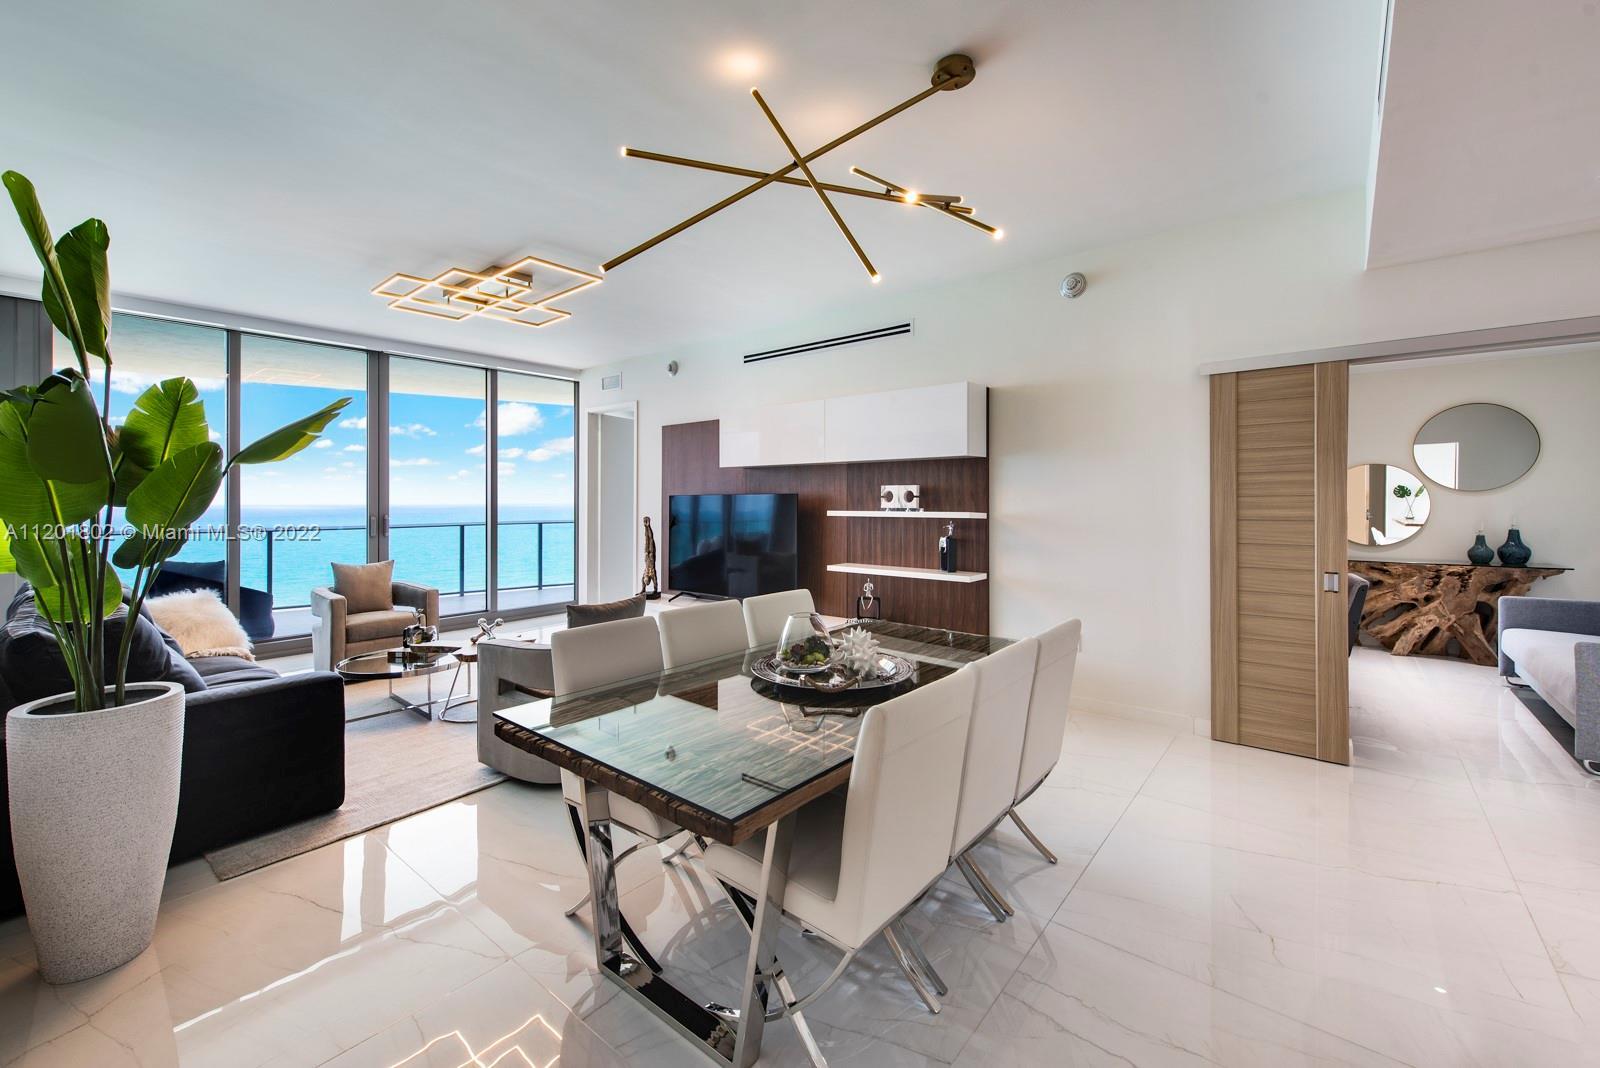 Luxury stunning brand new apt at the amazing Ritz-Carlton Residence at Sunny Isles Beach. Enjoy fore